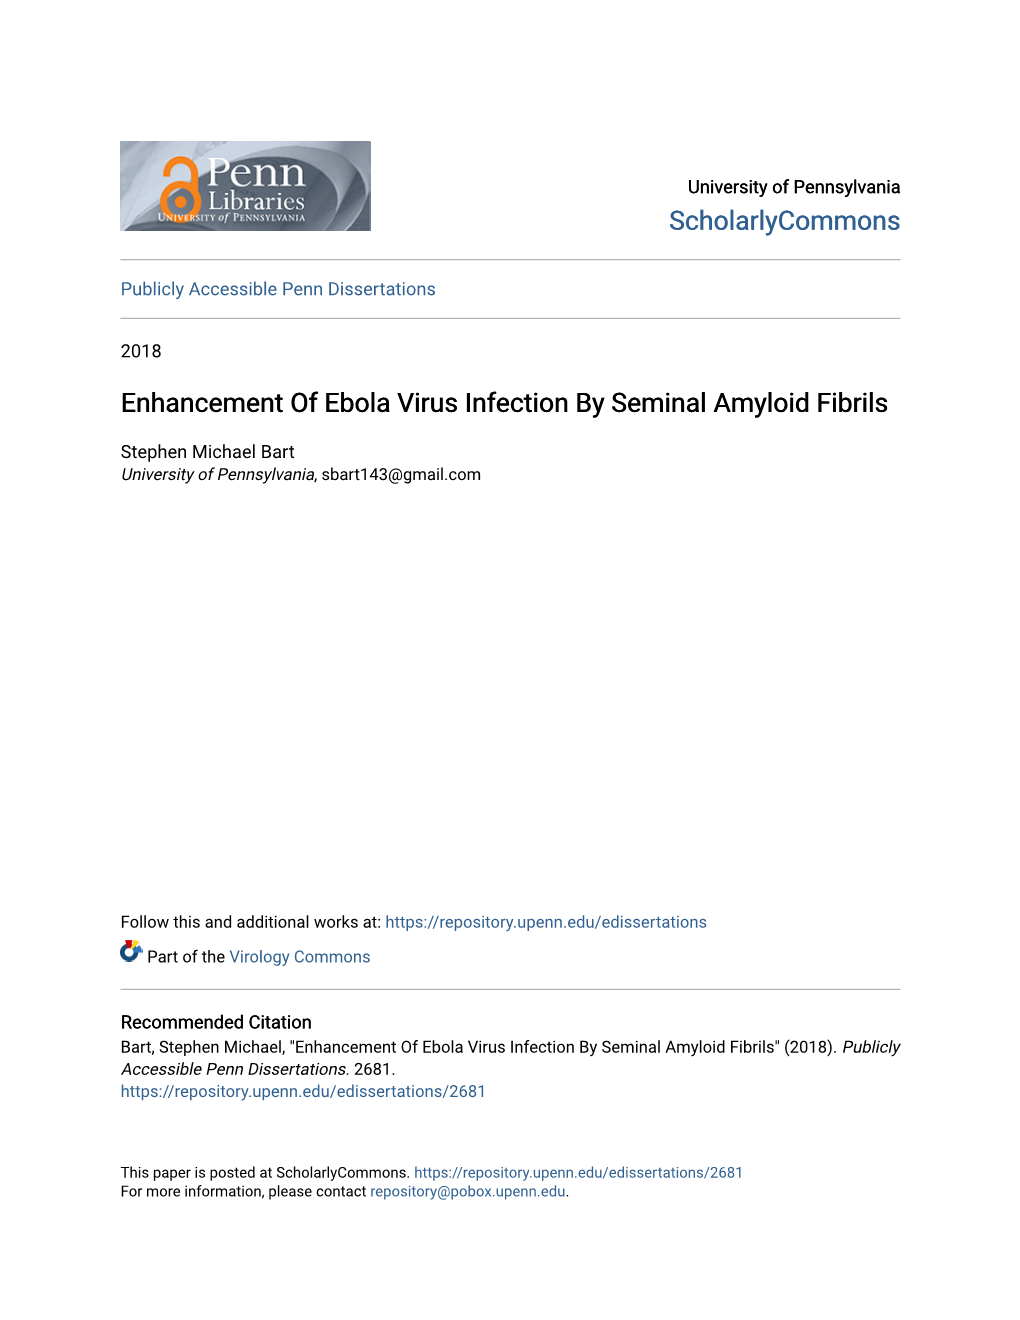 Enhancement of Ebola Virus Infection by Seminal Amyloid Fibrils